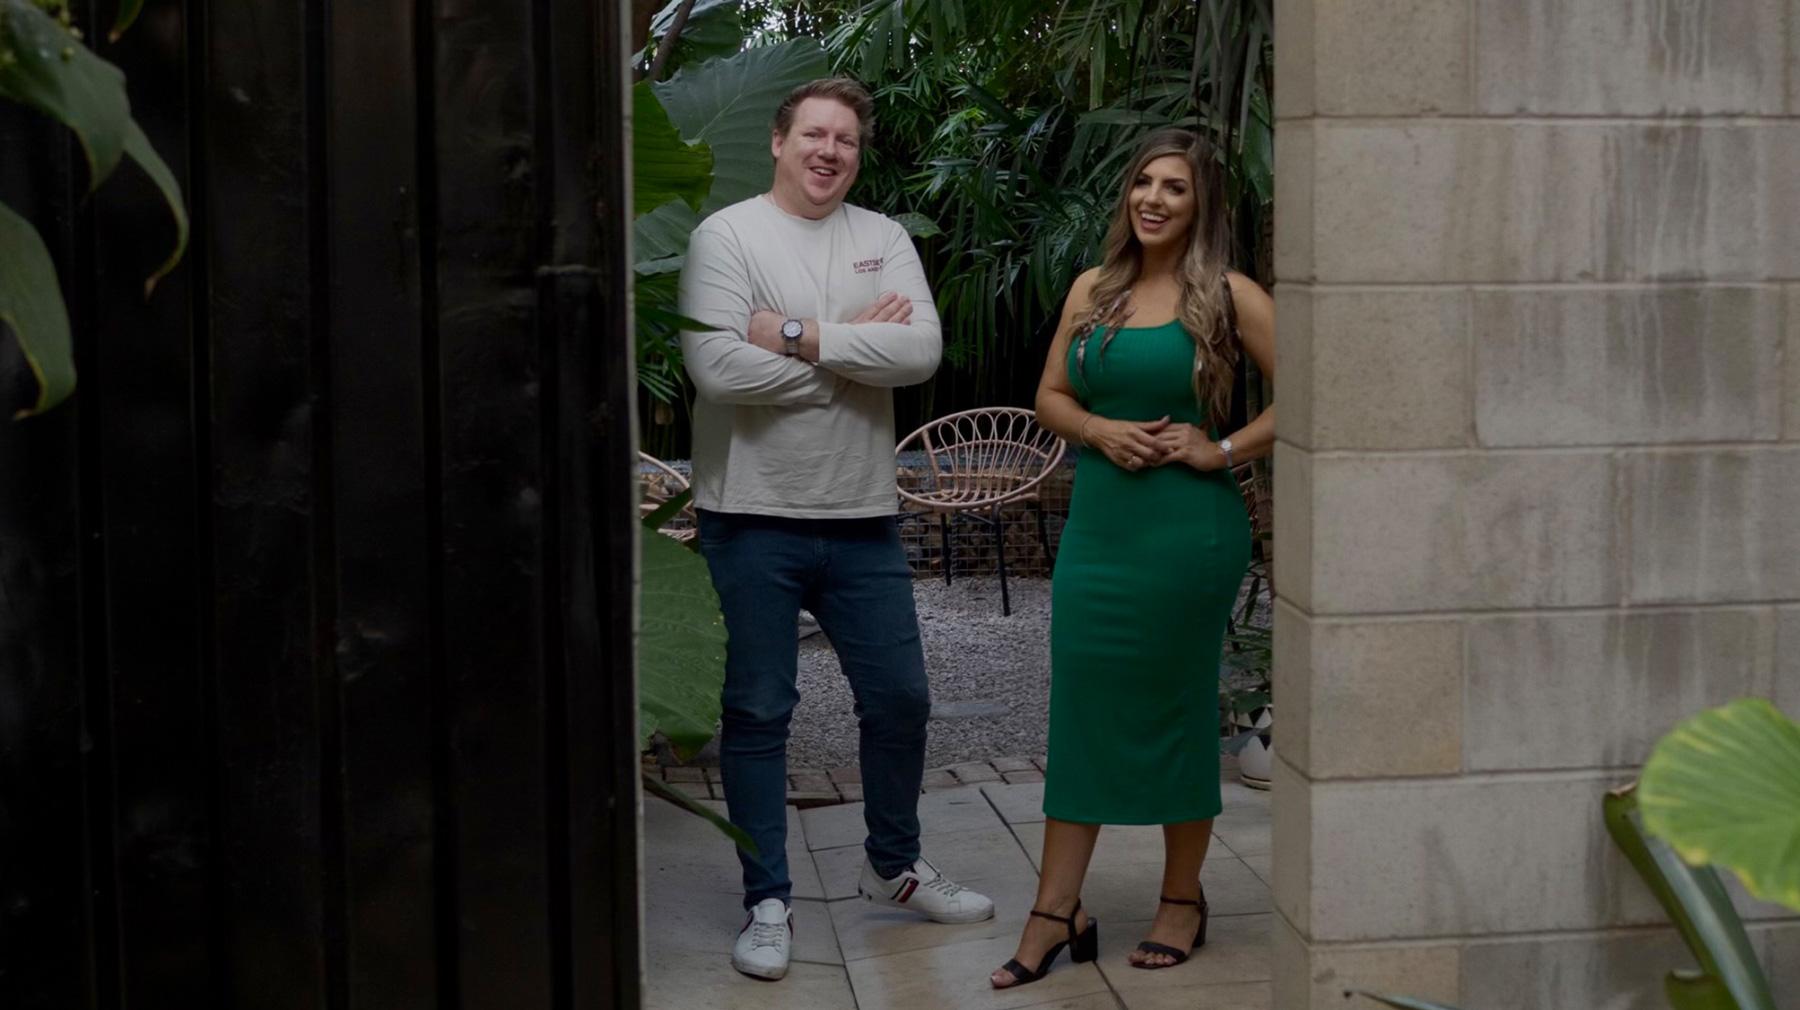 Hunt & Hawk co-founders Ryan Devlin and Sonya Vanjicki standing side by side against a garden backdrop.